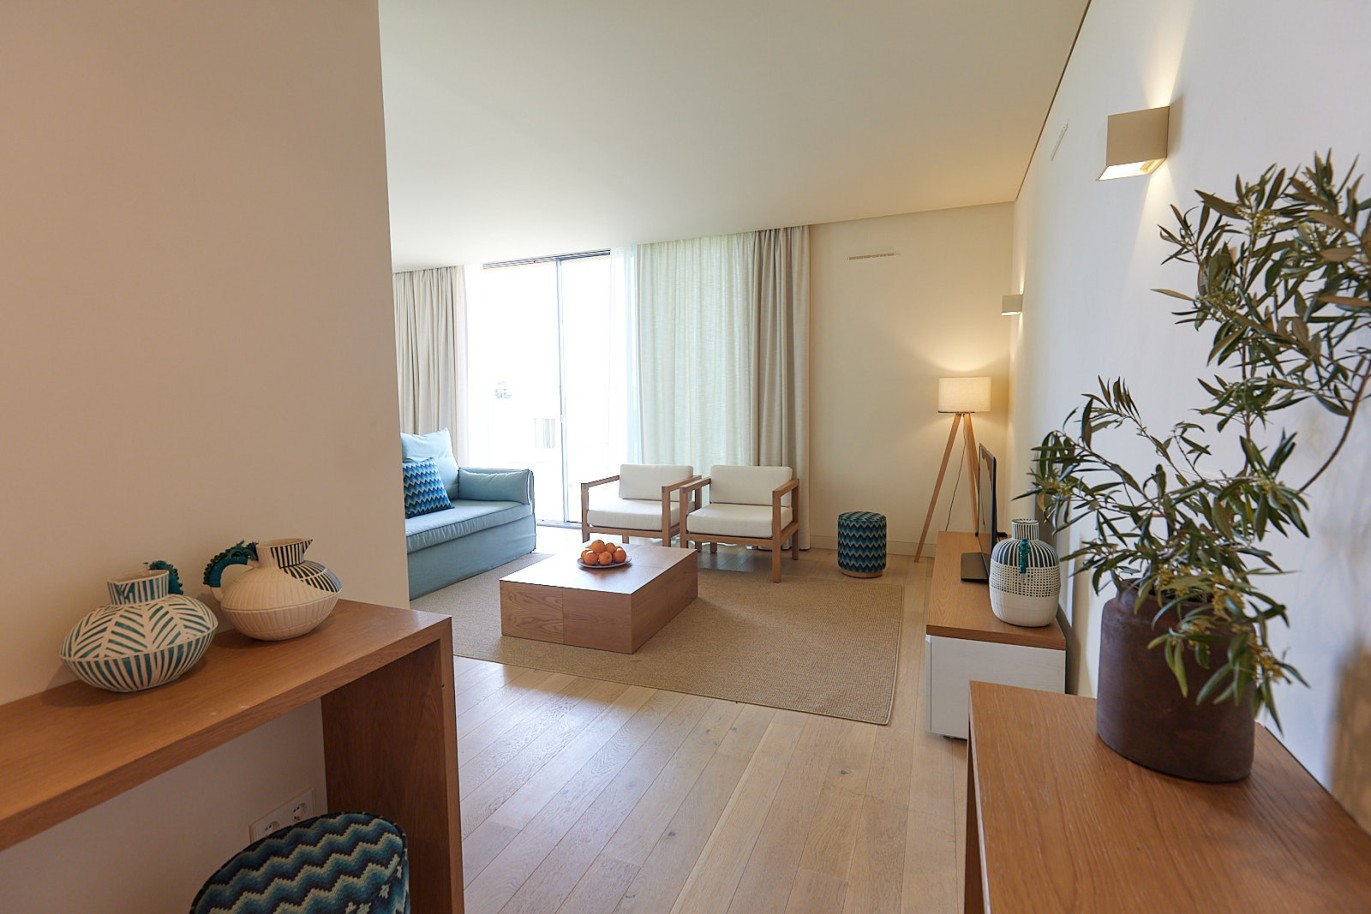 2 bedroom apartment in resort, for sale in Porches, Algarve_230493